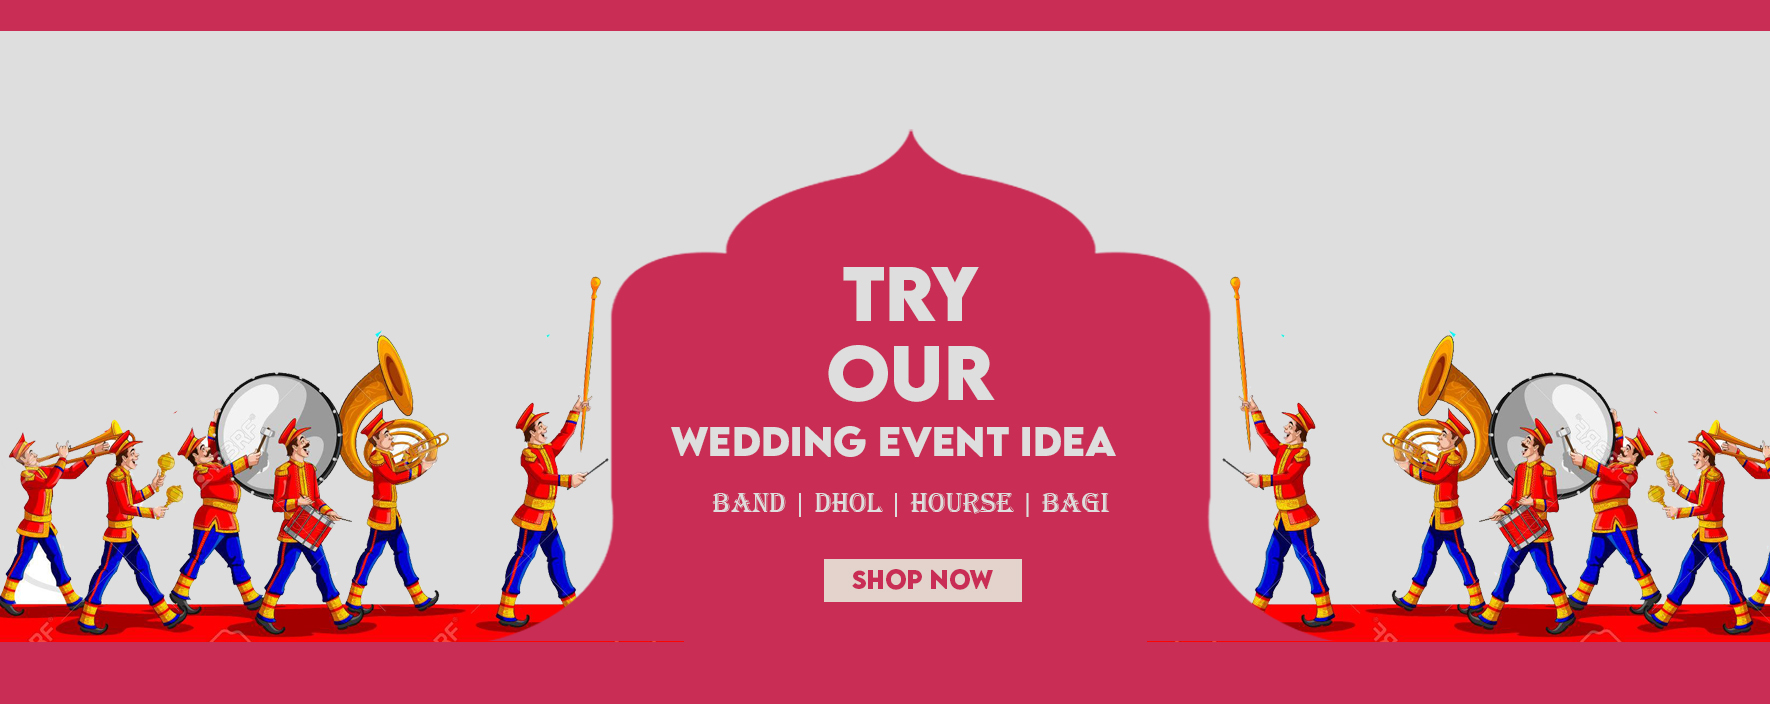 Wedding event Idea